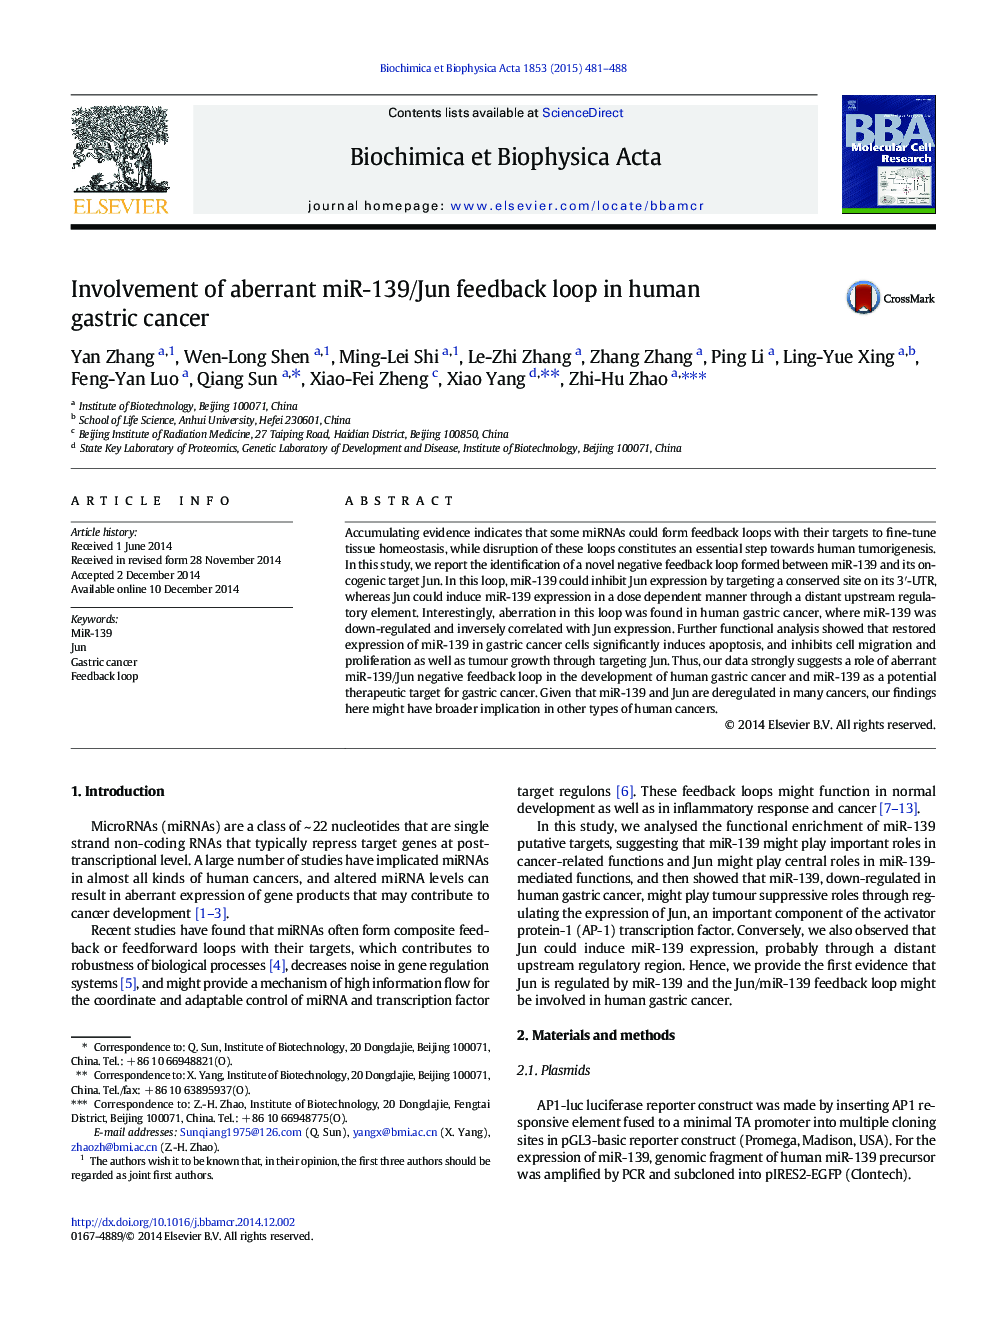 Involvement of aberrant miR-139/Jun feedback loop in human gastric cancer